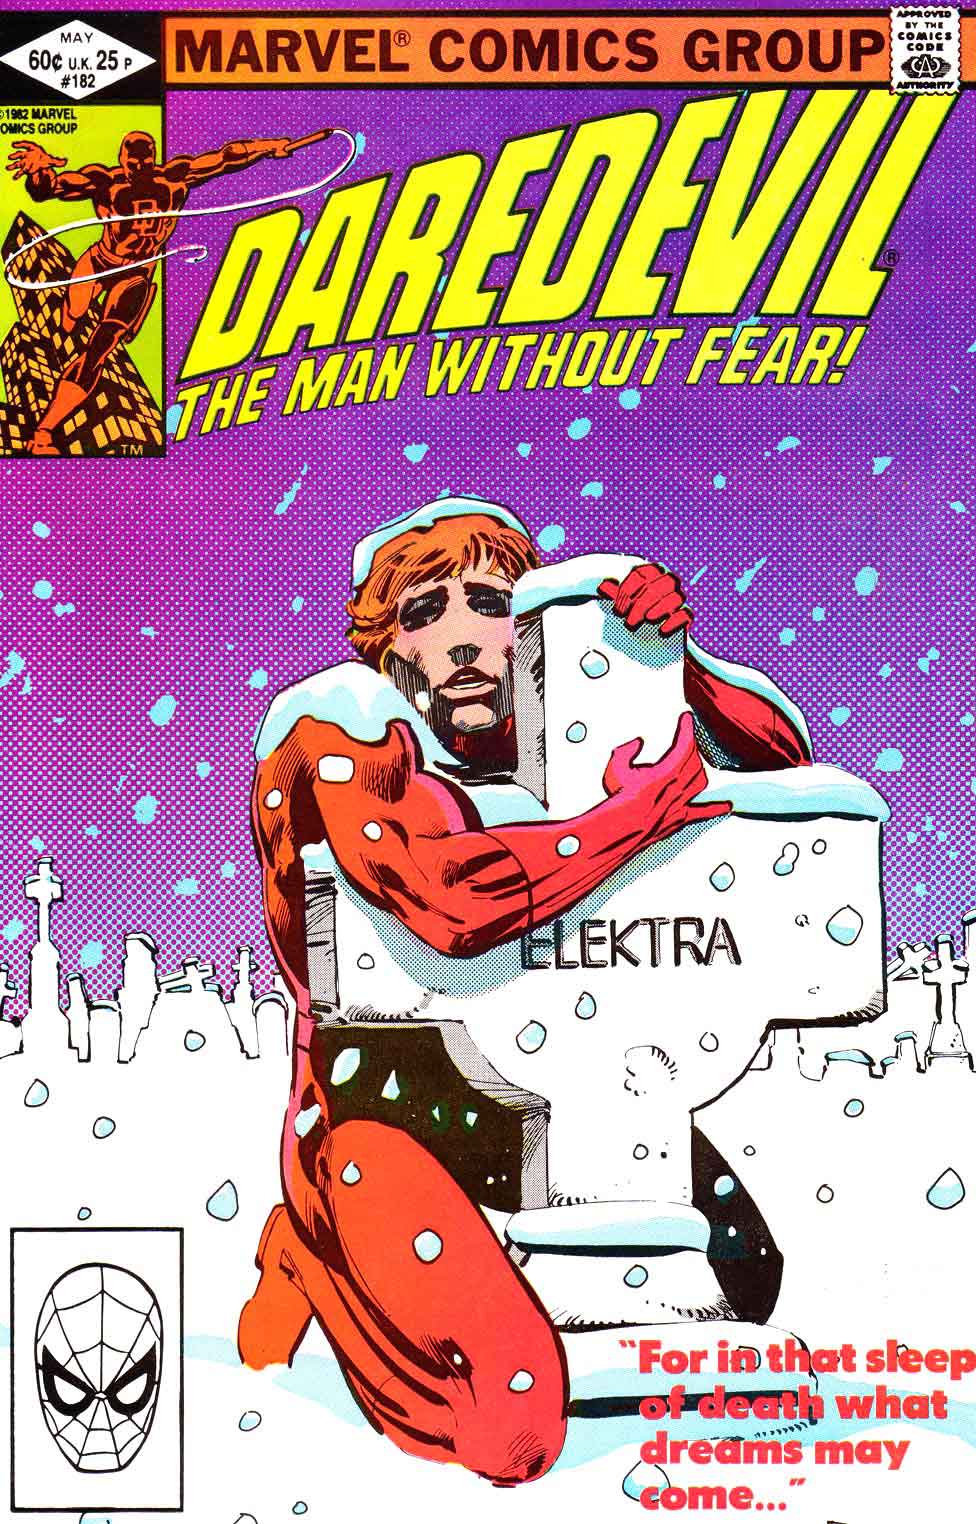 Daredevil v1 #182 marvel comic book cover art by Frank Miller